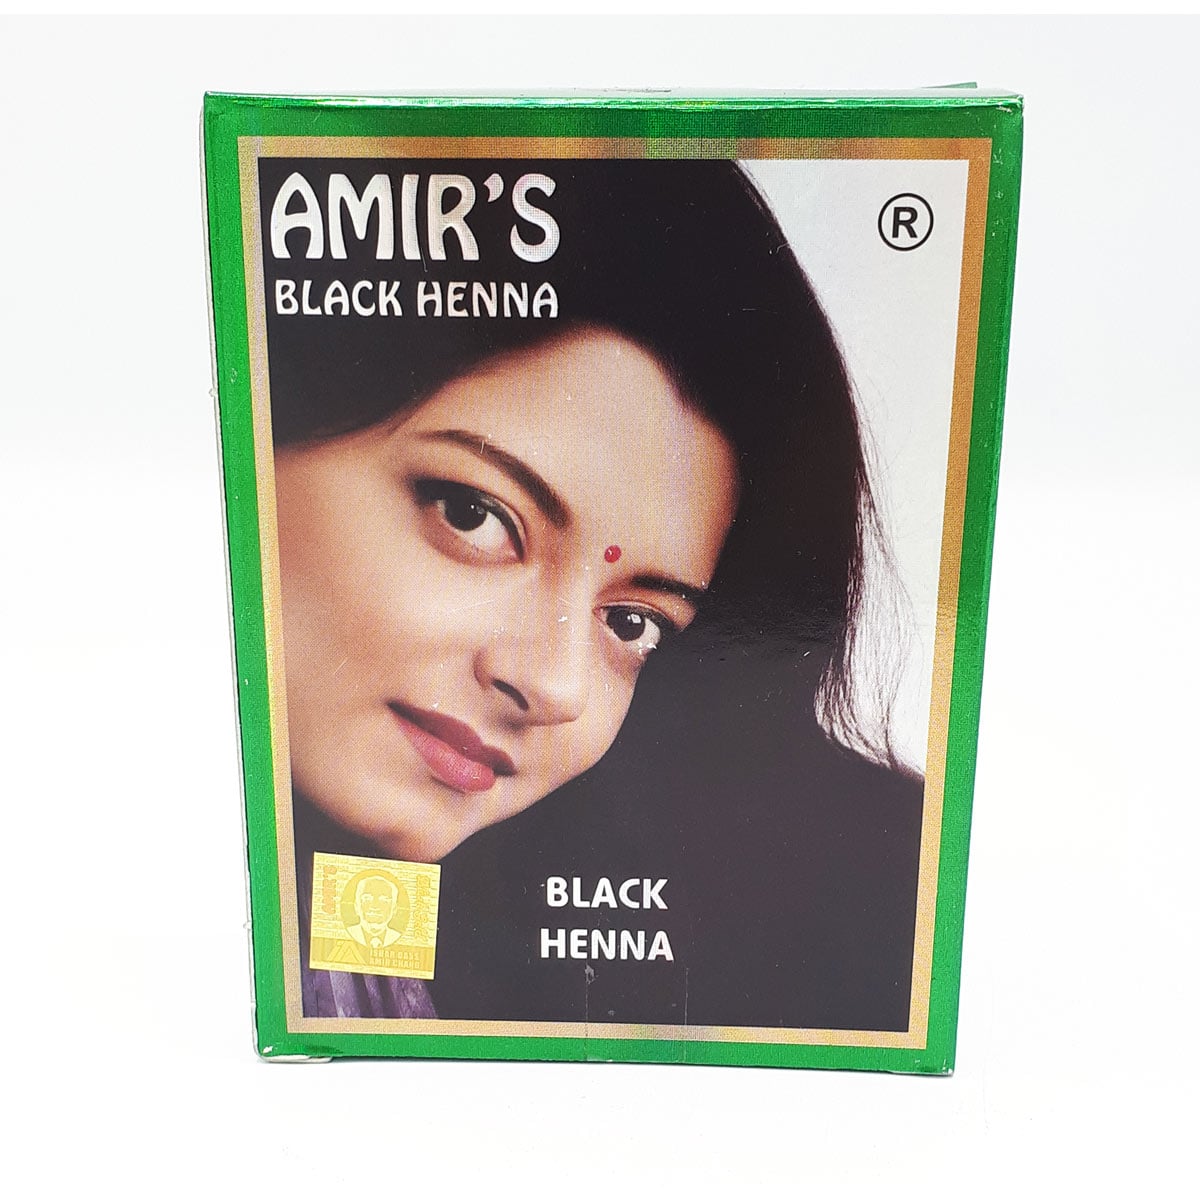 AMIR'S BLACK - Iloilo Supermart Online- Aton Guid ini!